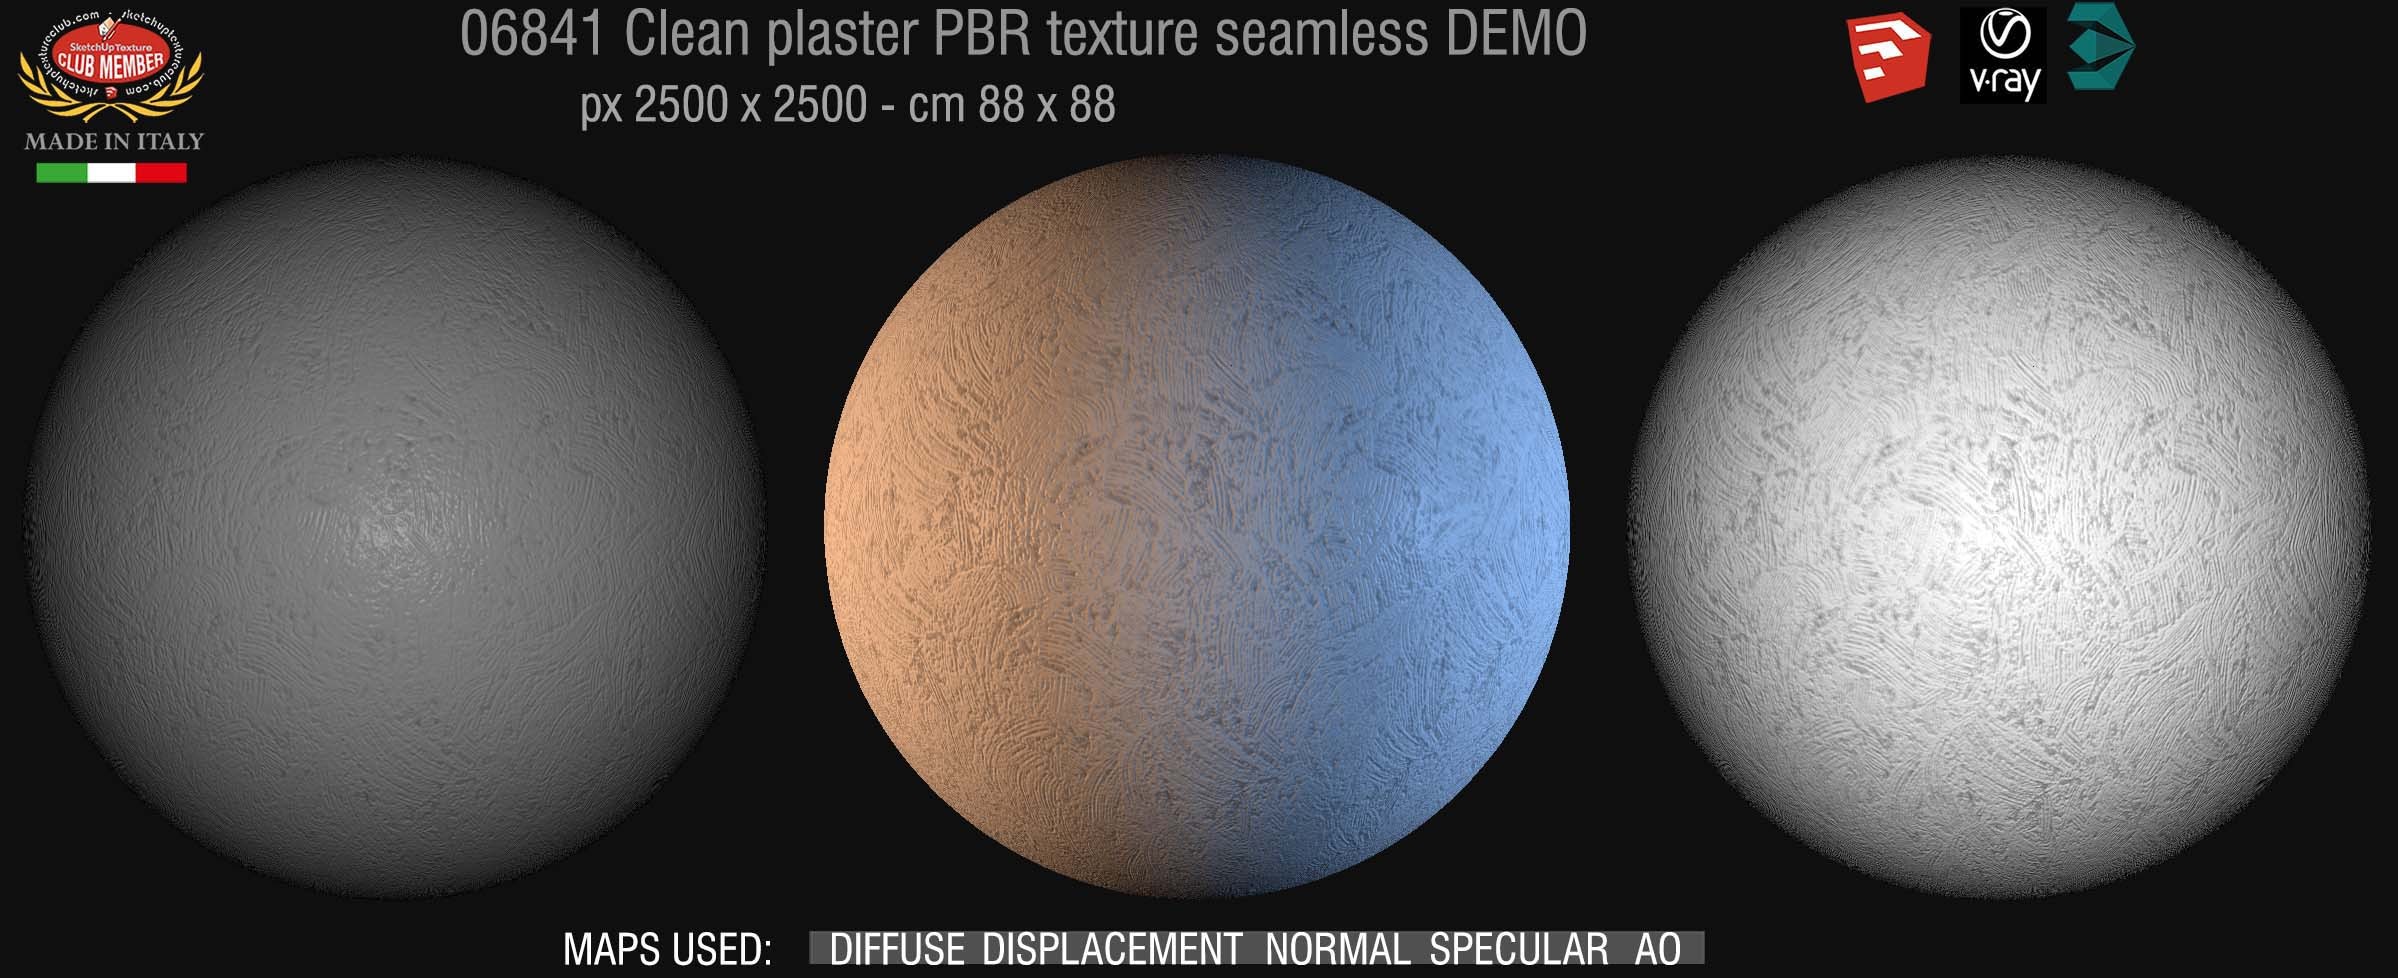 06841 clean plaster PBR texture seamless DEMO